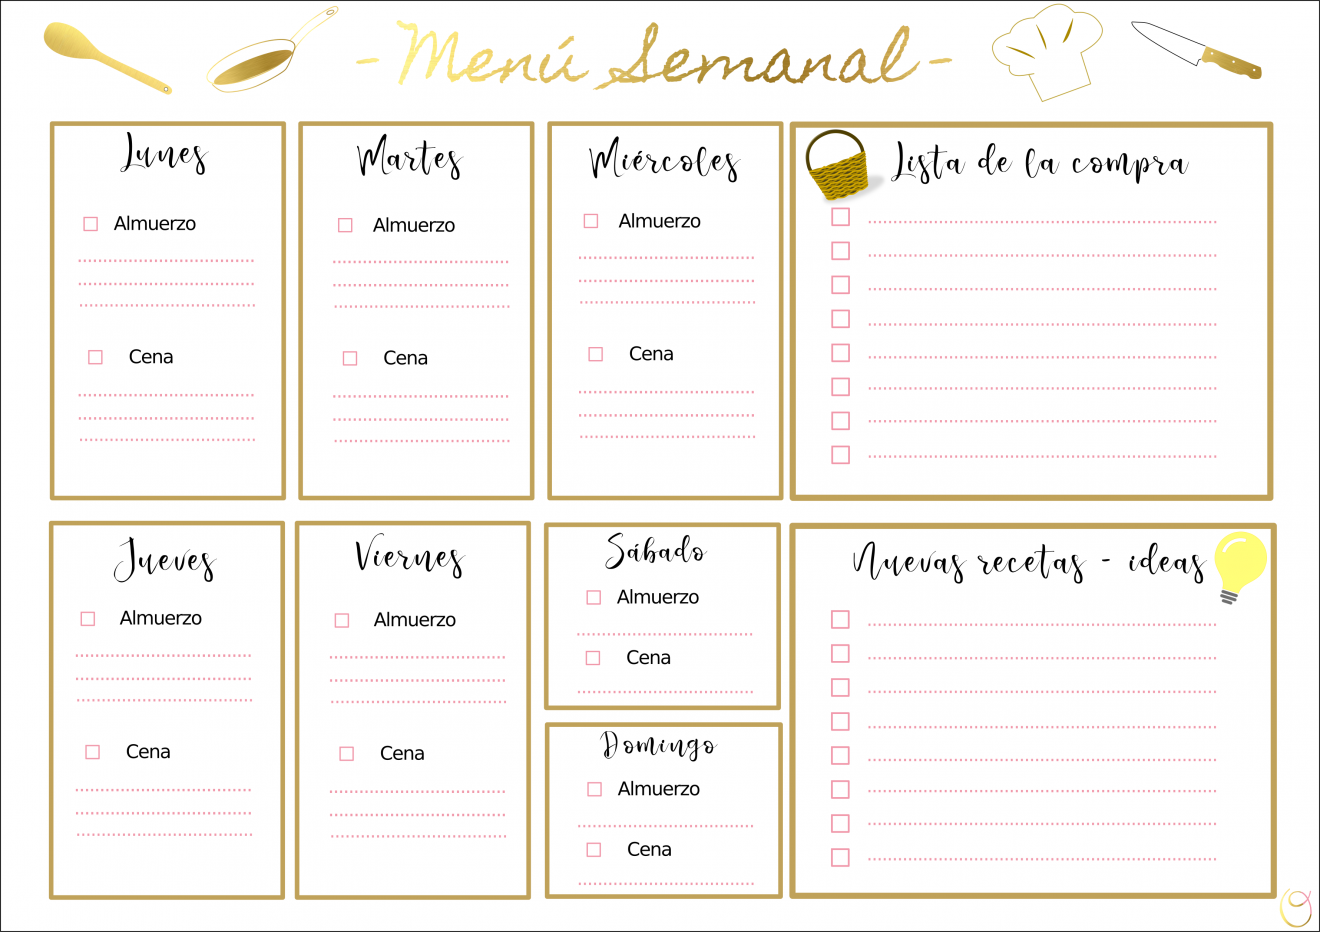 Ideas para menu semanal